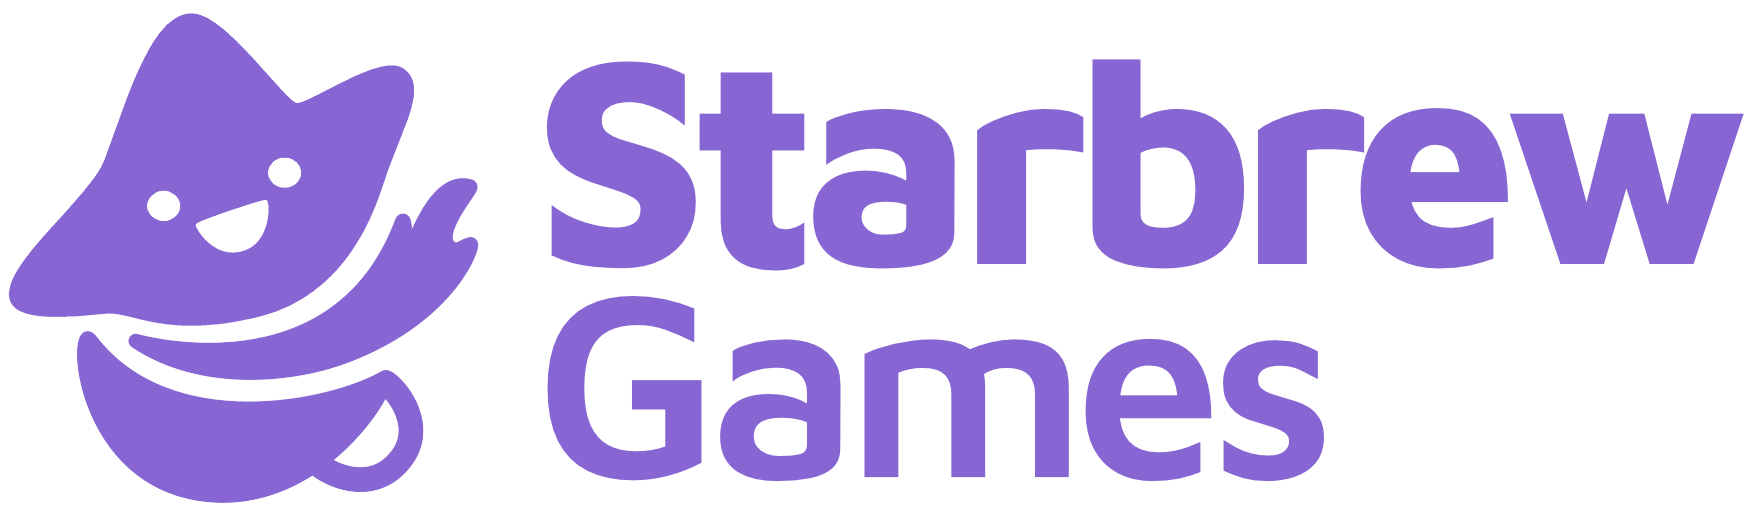 Starbrew Games Logo